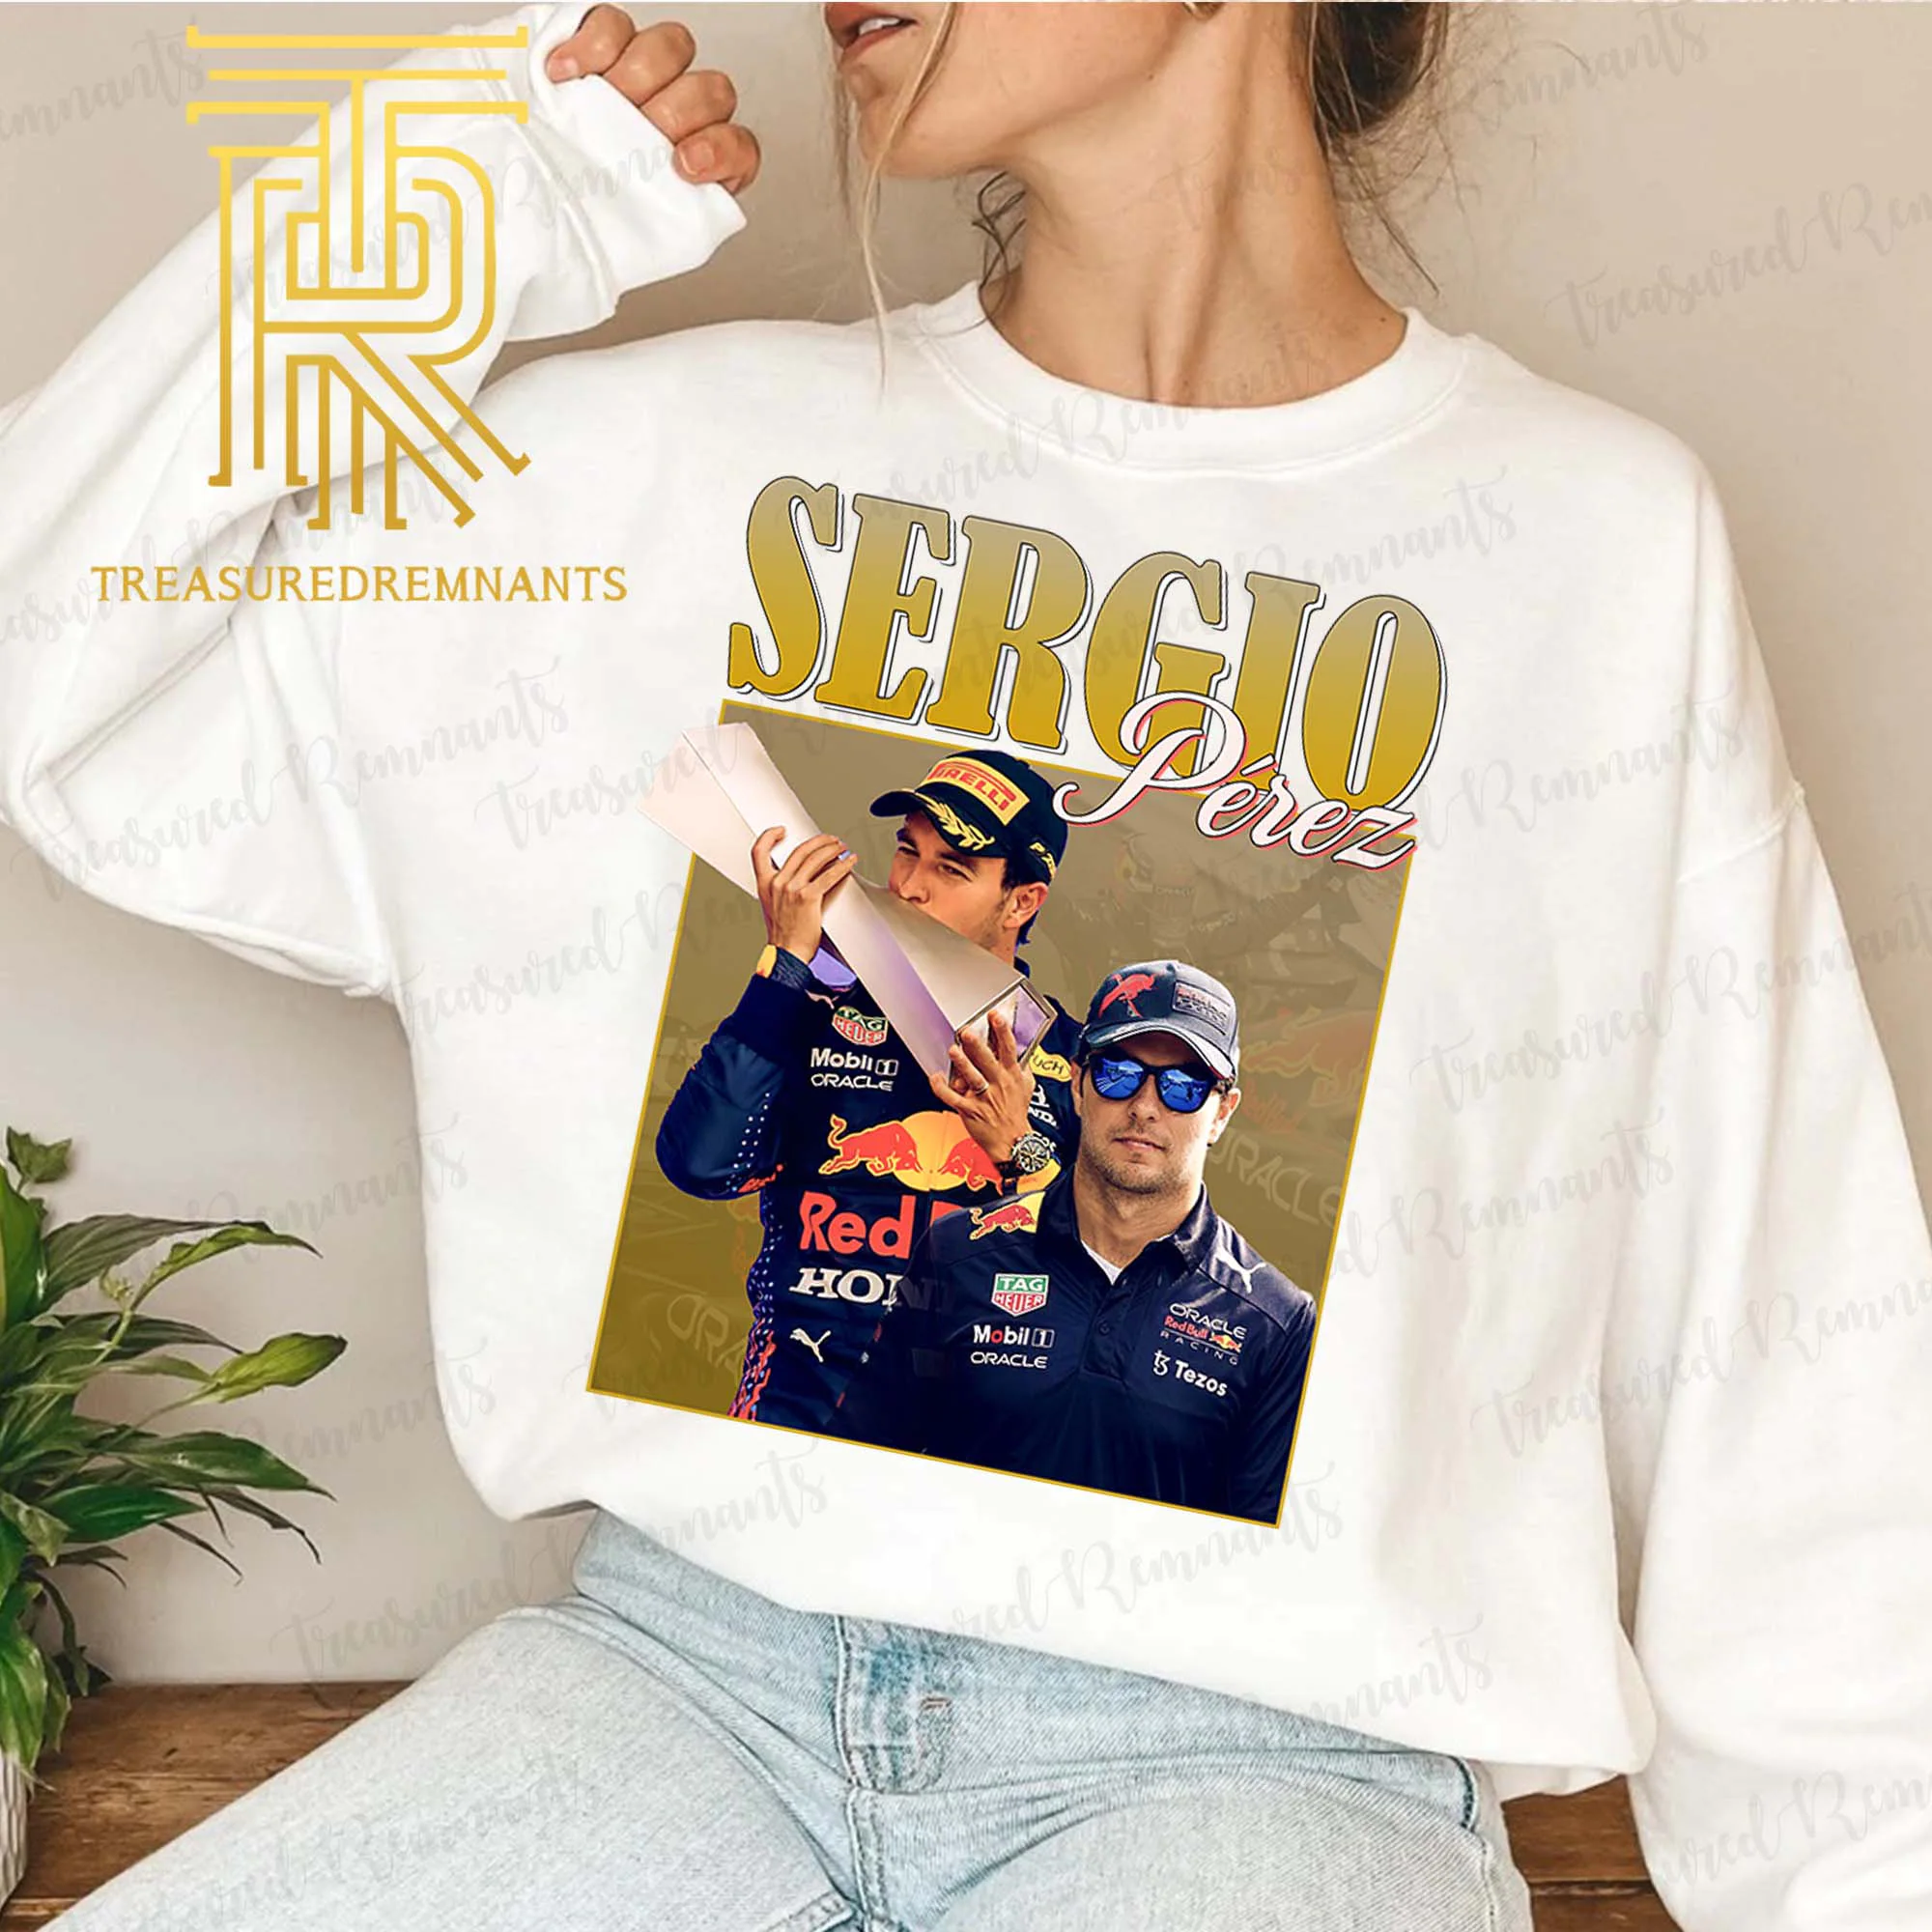 Sergio Perez Baseball Jersey - Home XS - Furious Motorsport